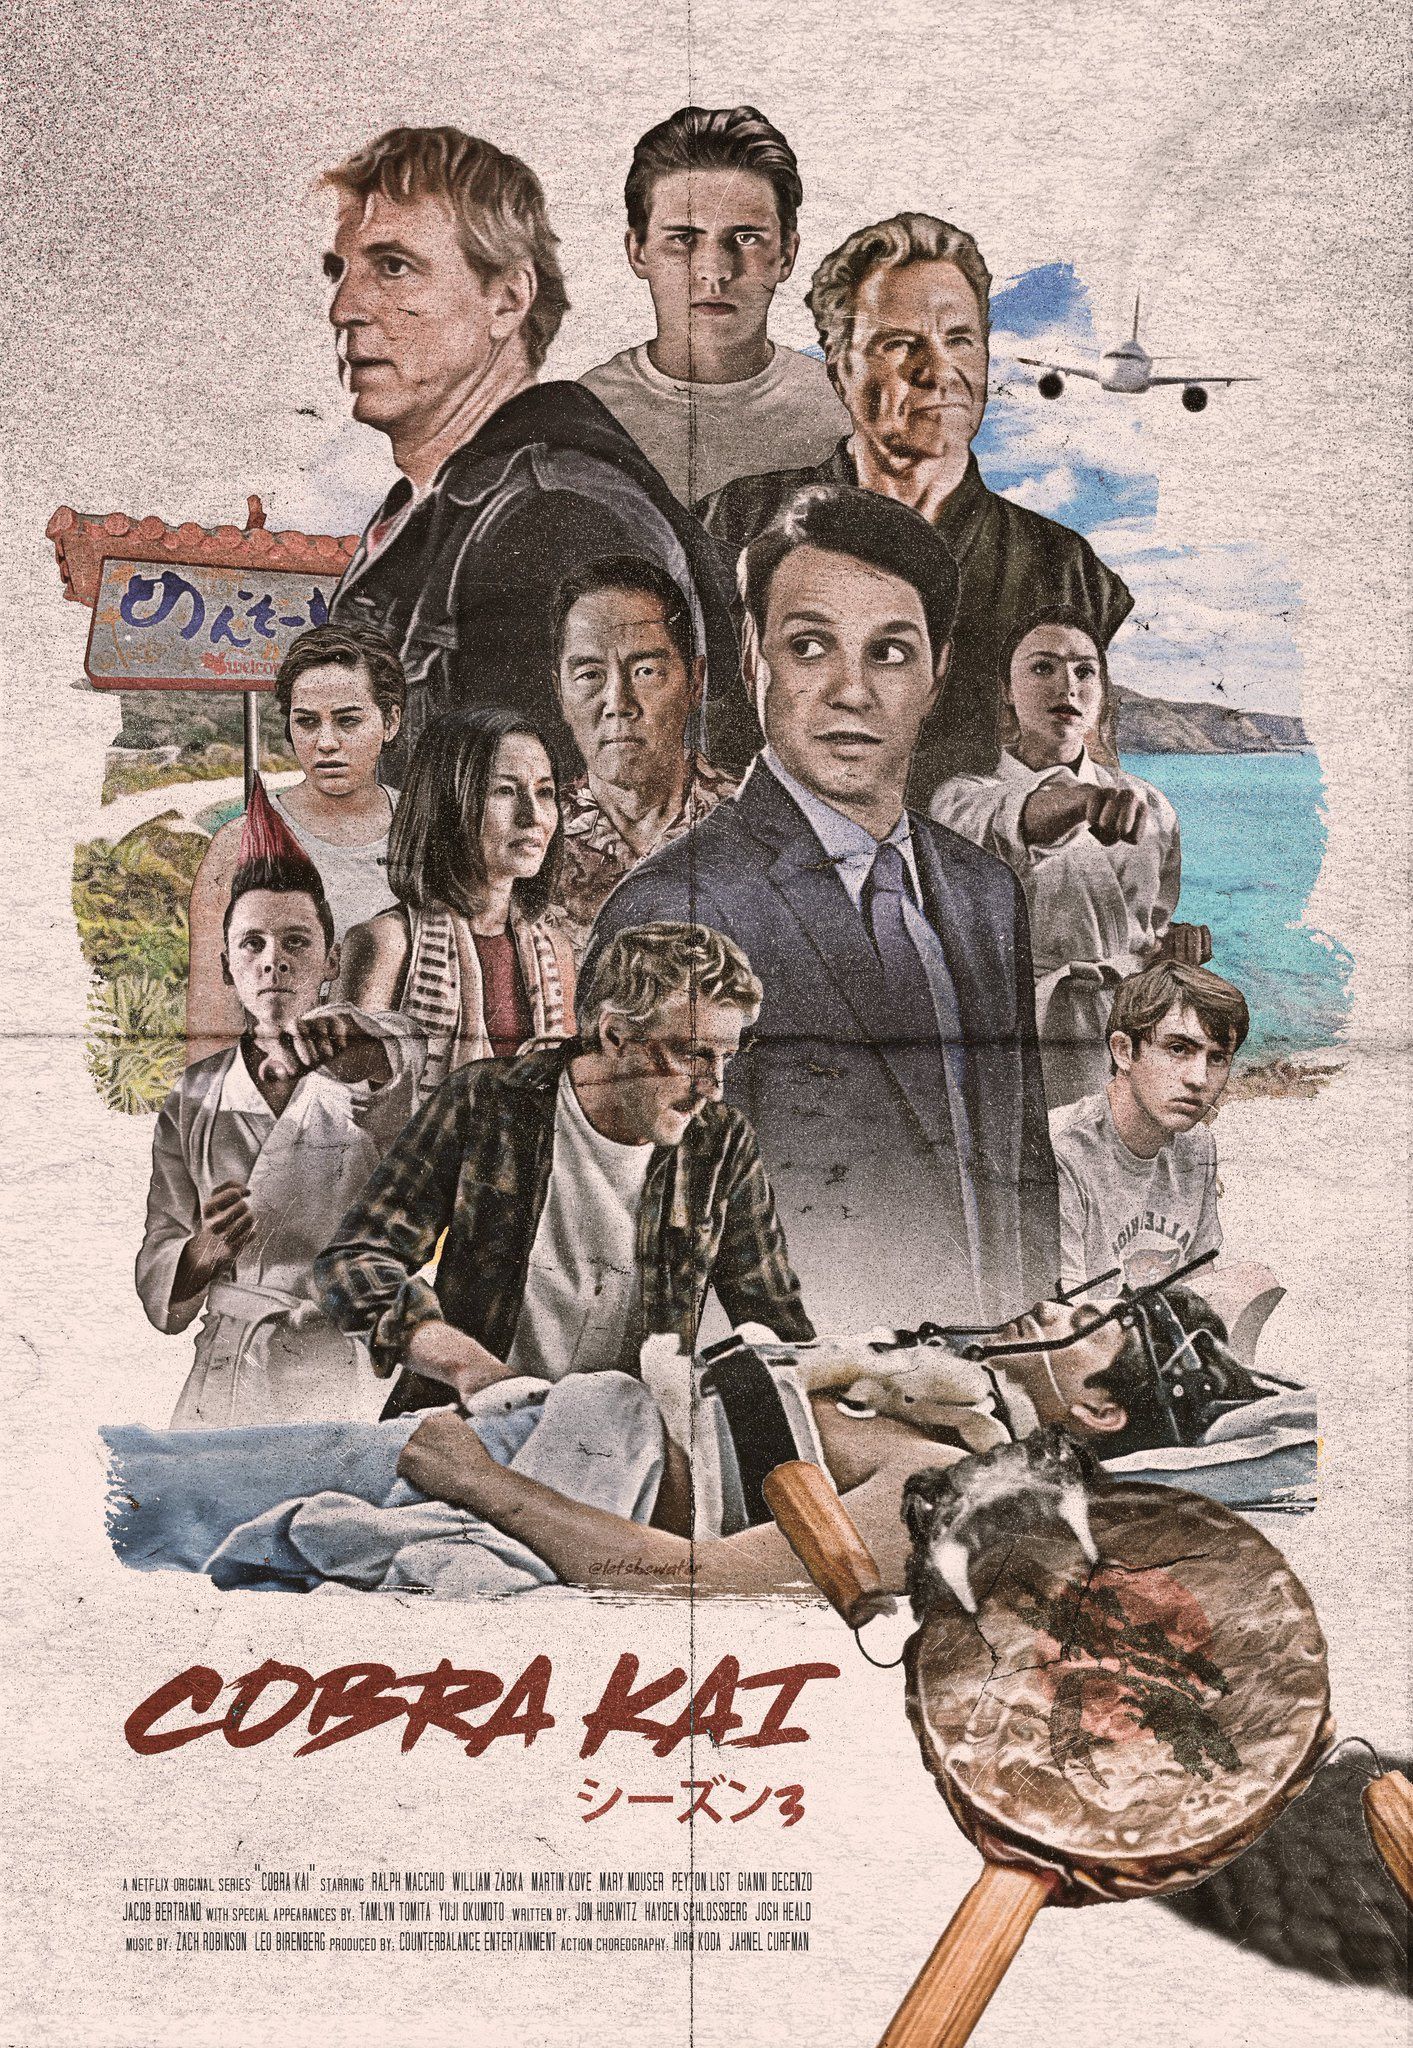 Cobra Kai Season 3 Wallpapers